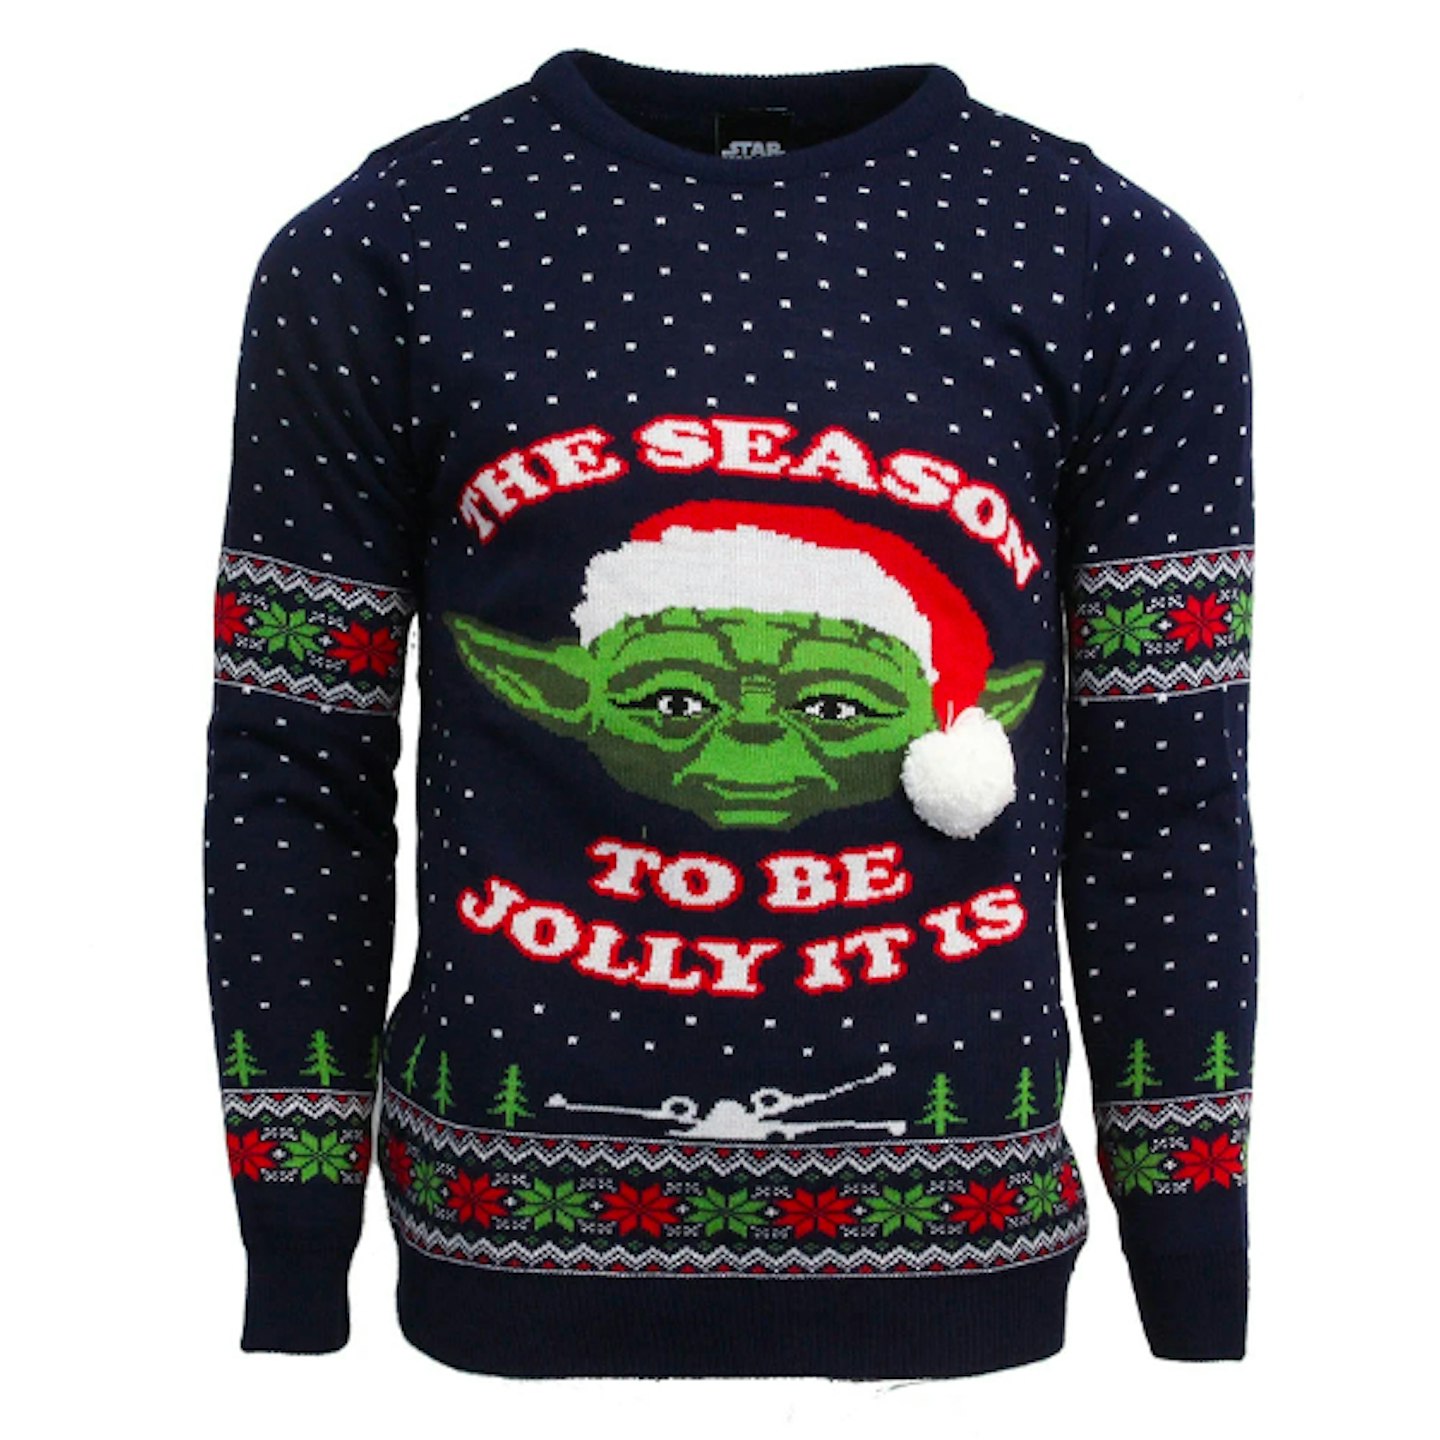 Star Wars Master Yoda Christmas Jumper